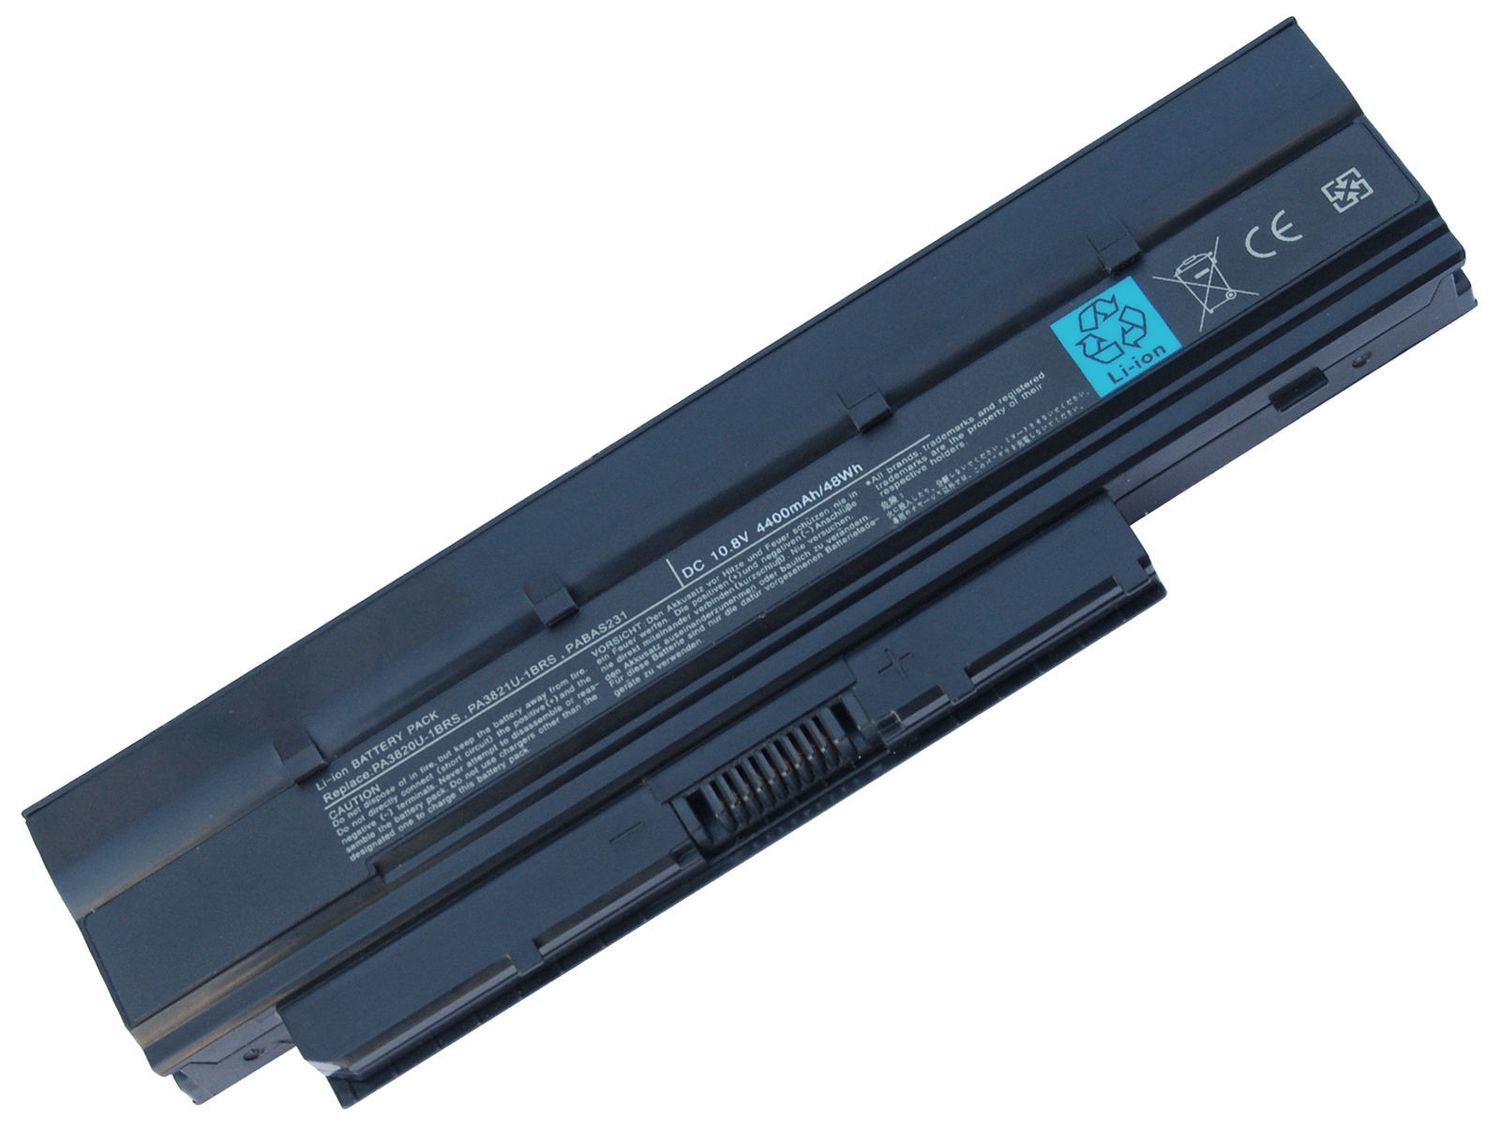 Toshiba dynabook mx series satellite T210 mini nb500 laptop battery